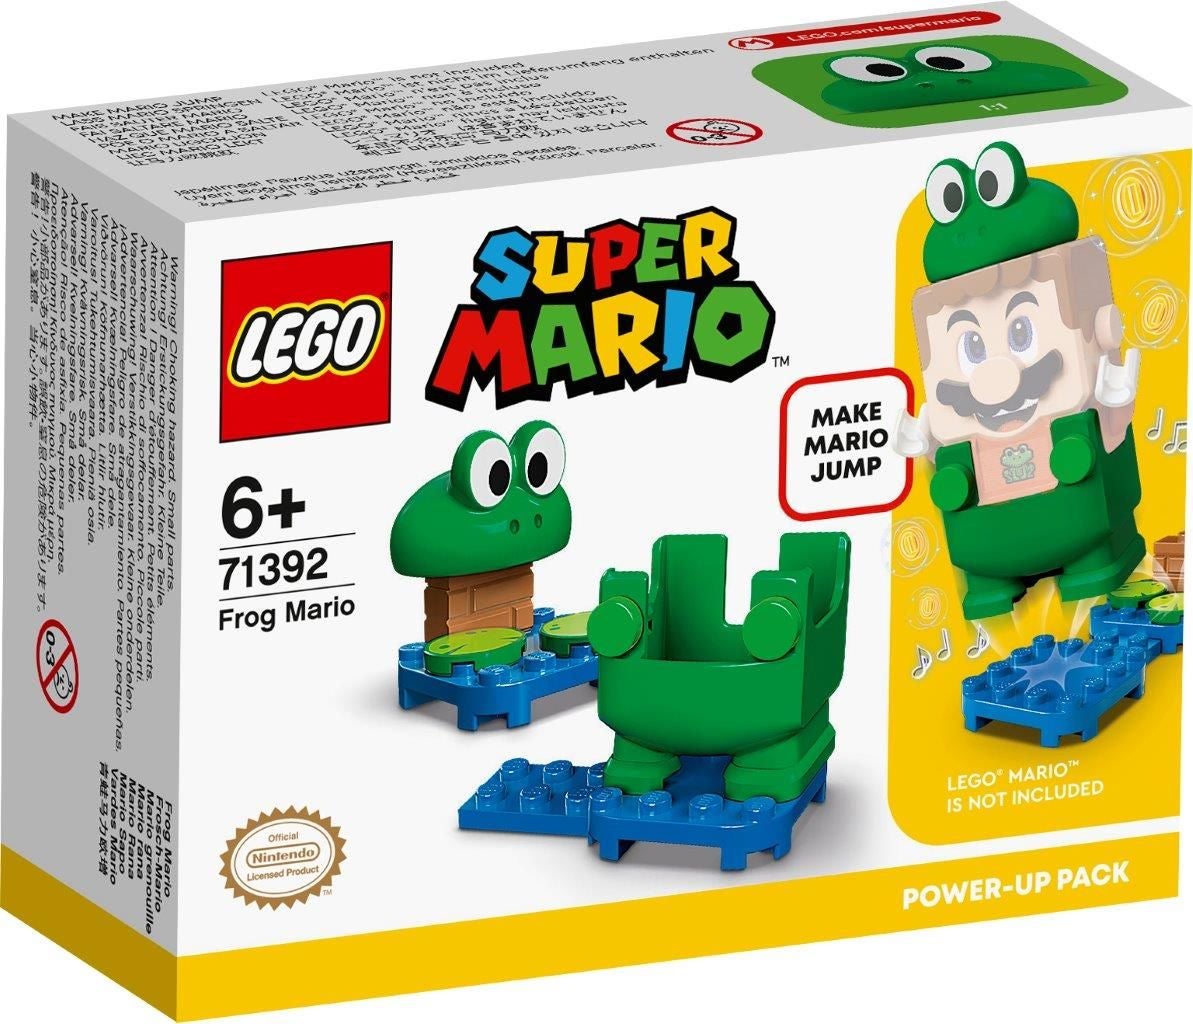 Level Up with These New LEGO SUPER MARIO BROS. Sets - Nerdist